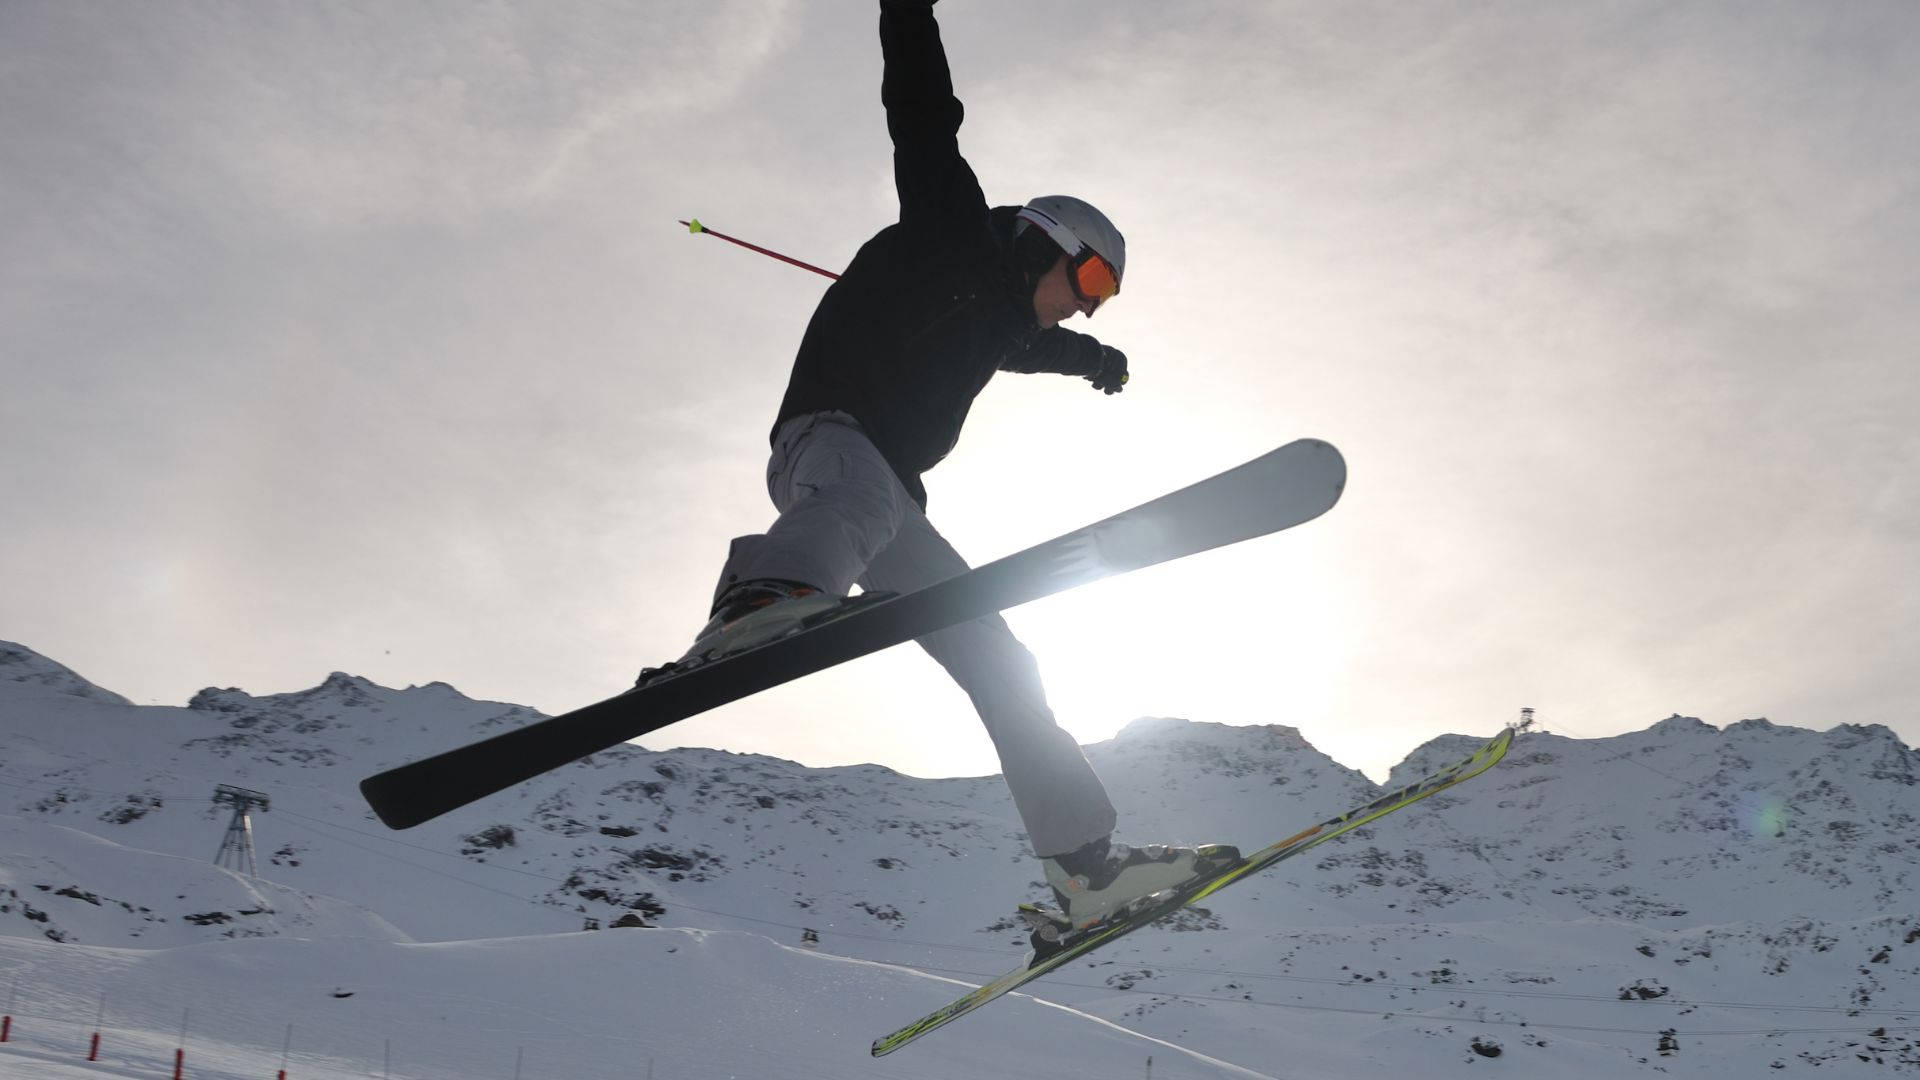 Best Ski Jumping Athlete Background